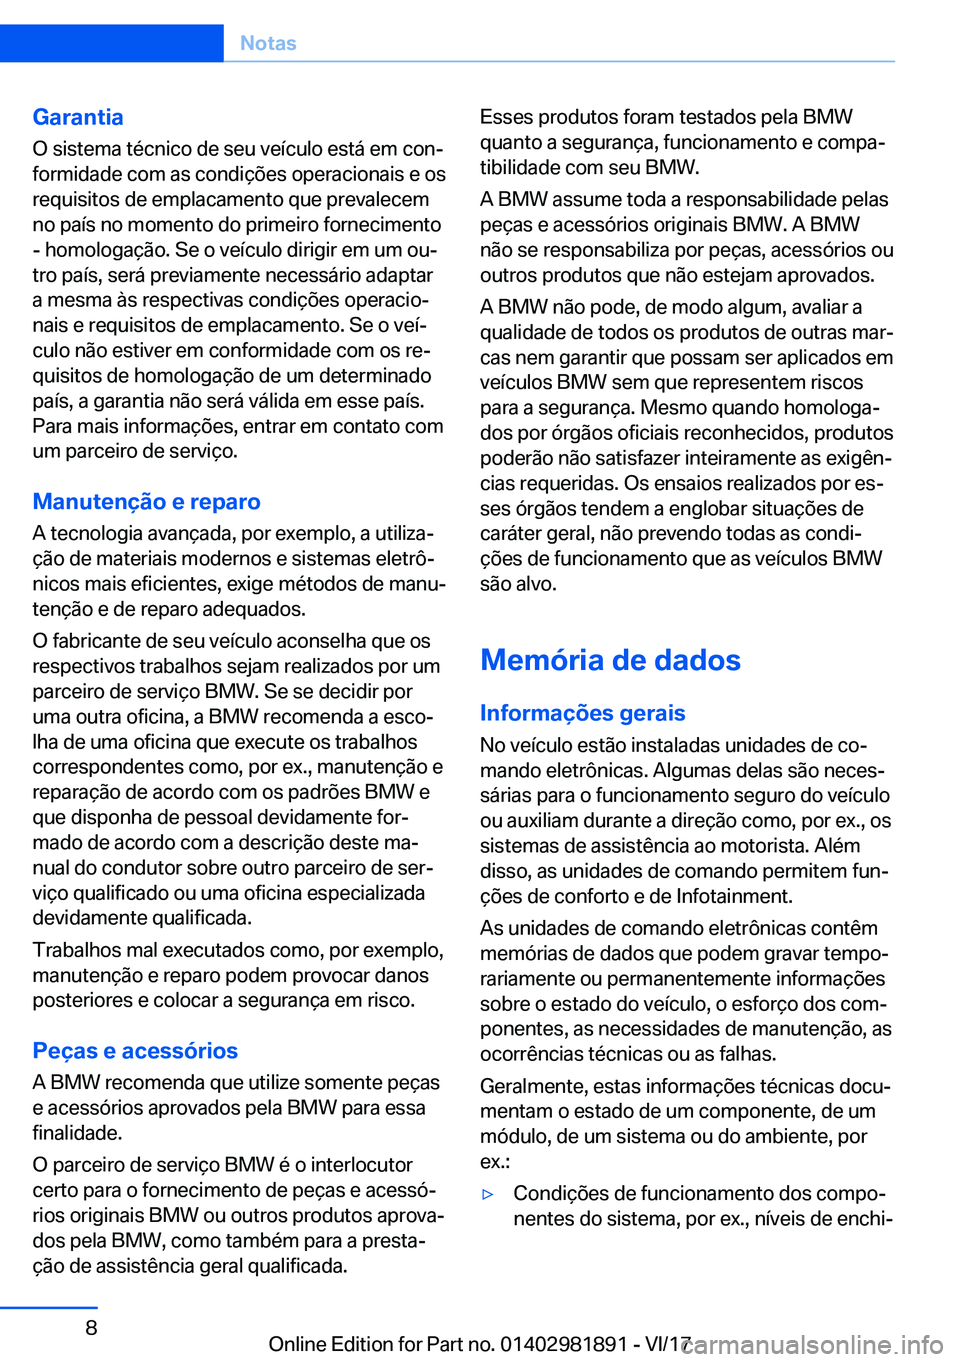 BMW 5 SERIES 2018  Manual do condutor (in Portuguese) �G�a�r�a�n�t�i�a�O� �s�i�s�t�e�m�a� �t�é�c�n�i�c�o� �d�e� �s�e�u� �v�e�